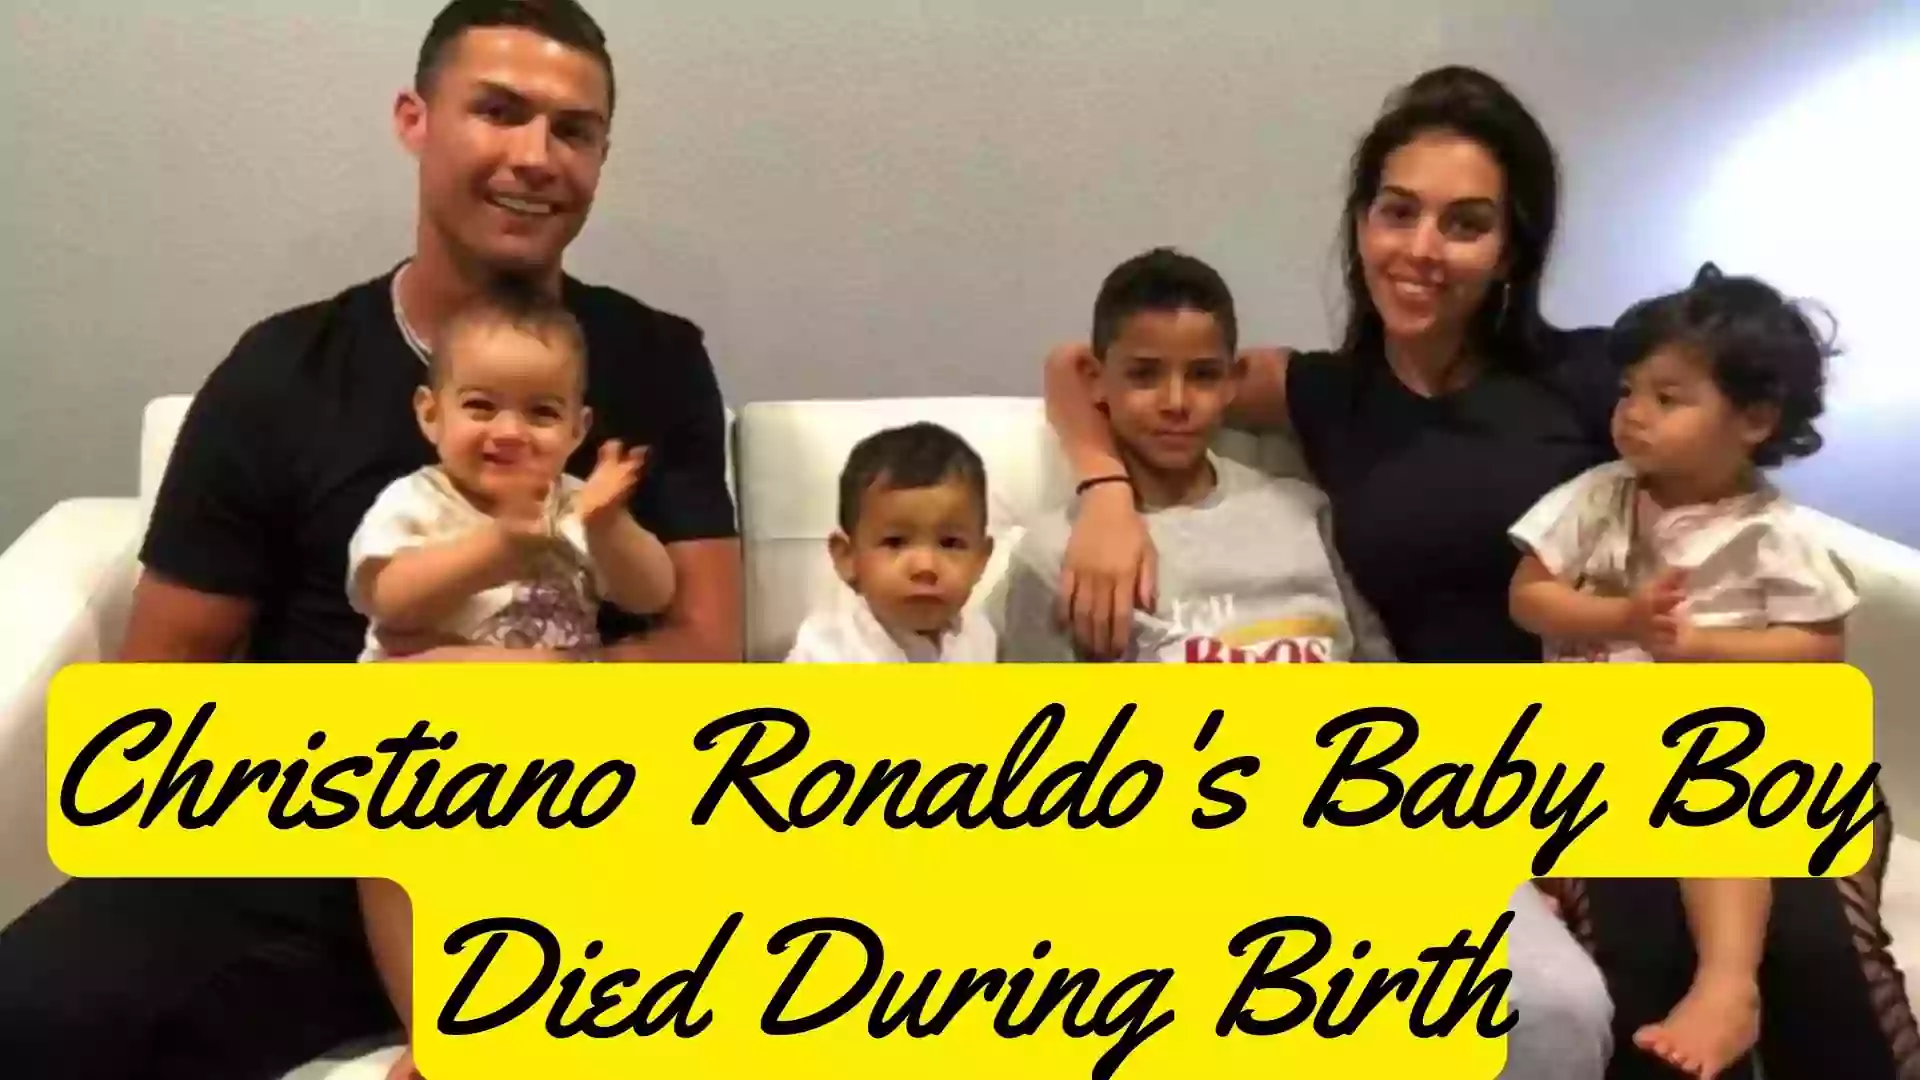 Christiano Ronaldo's Baby Boy Died During Birth